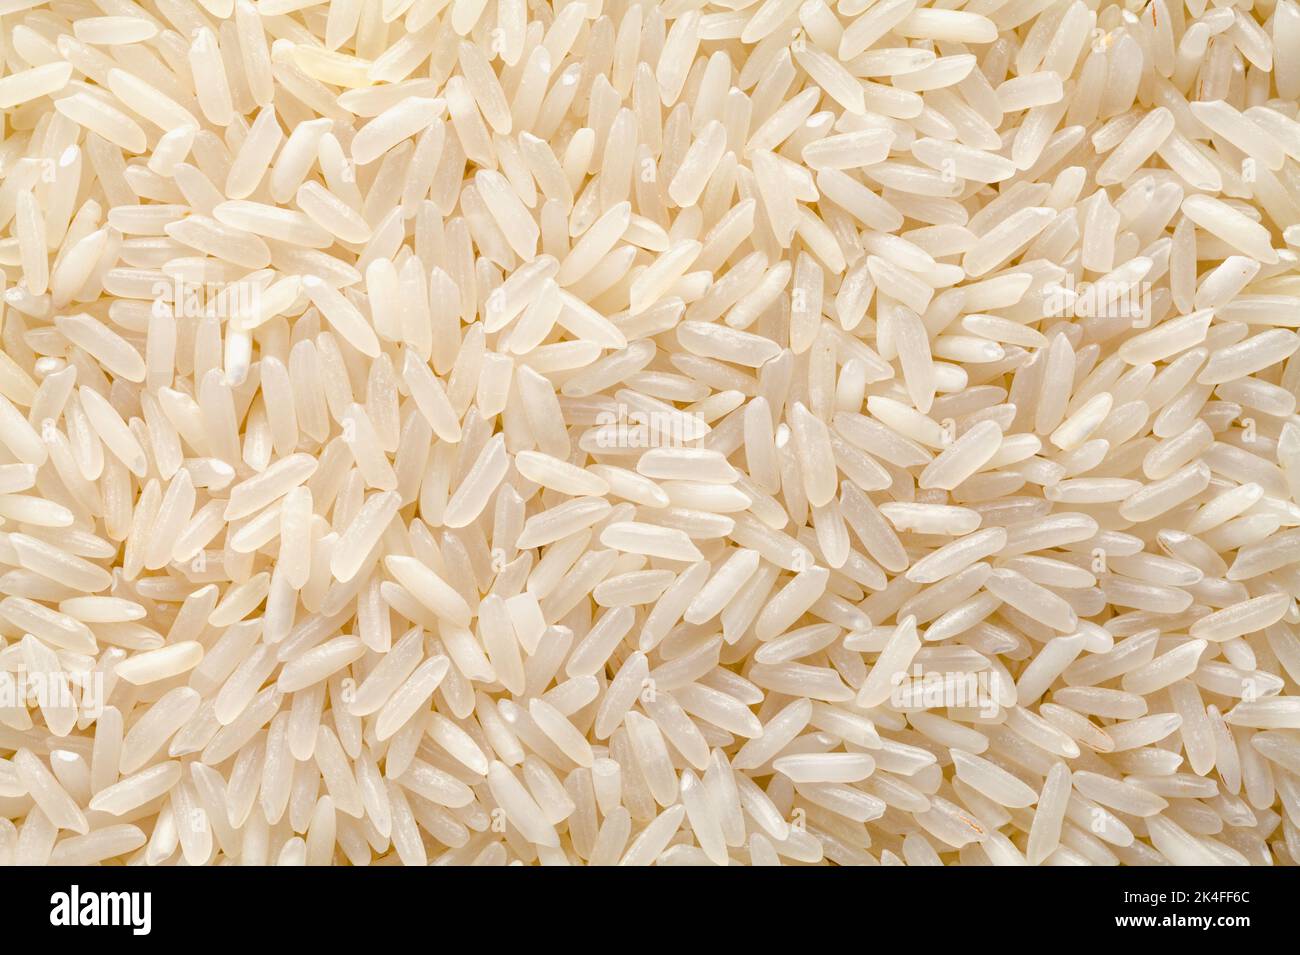 Dry Long Grain White Rice Pile Background. Stock Photo